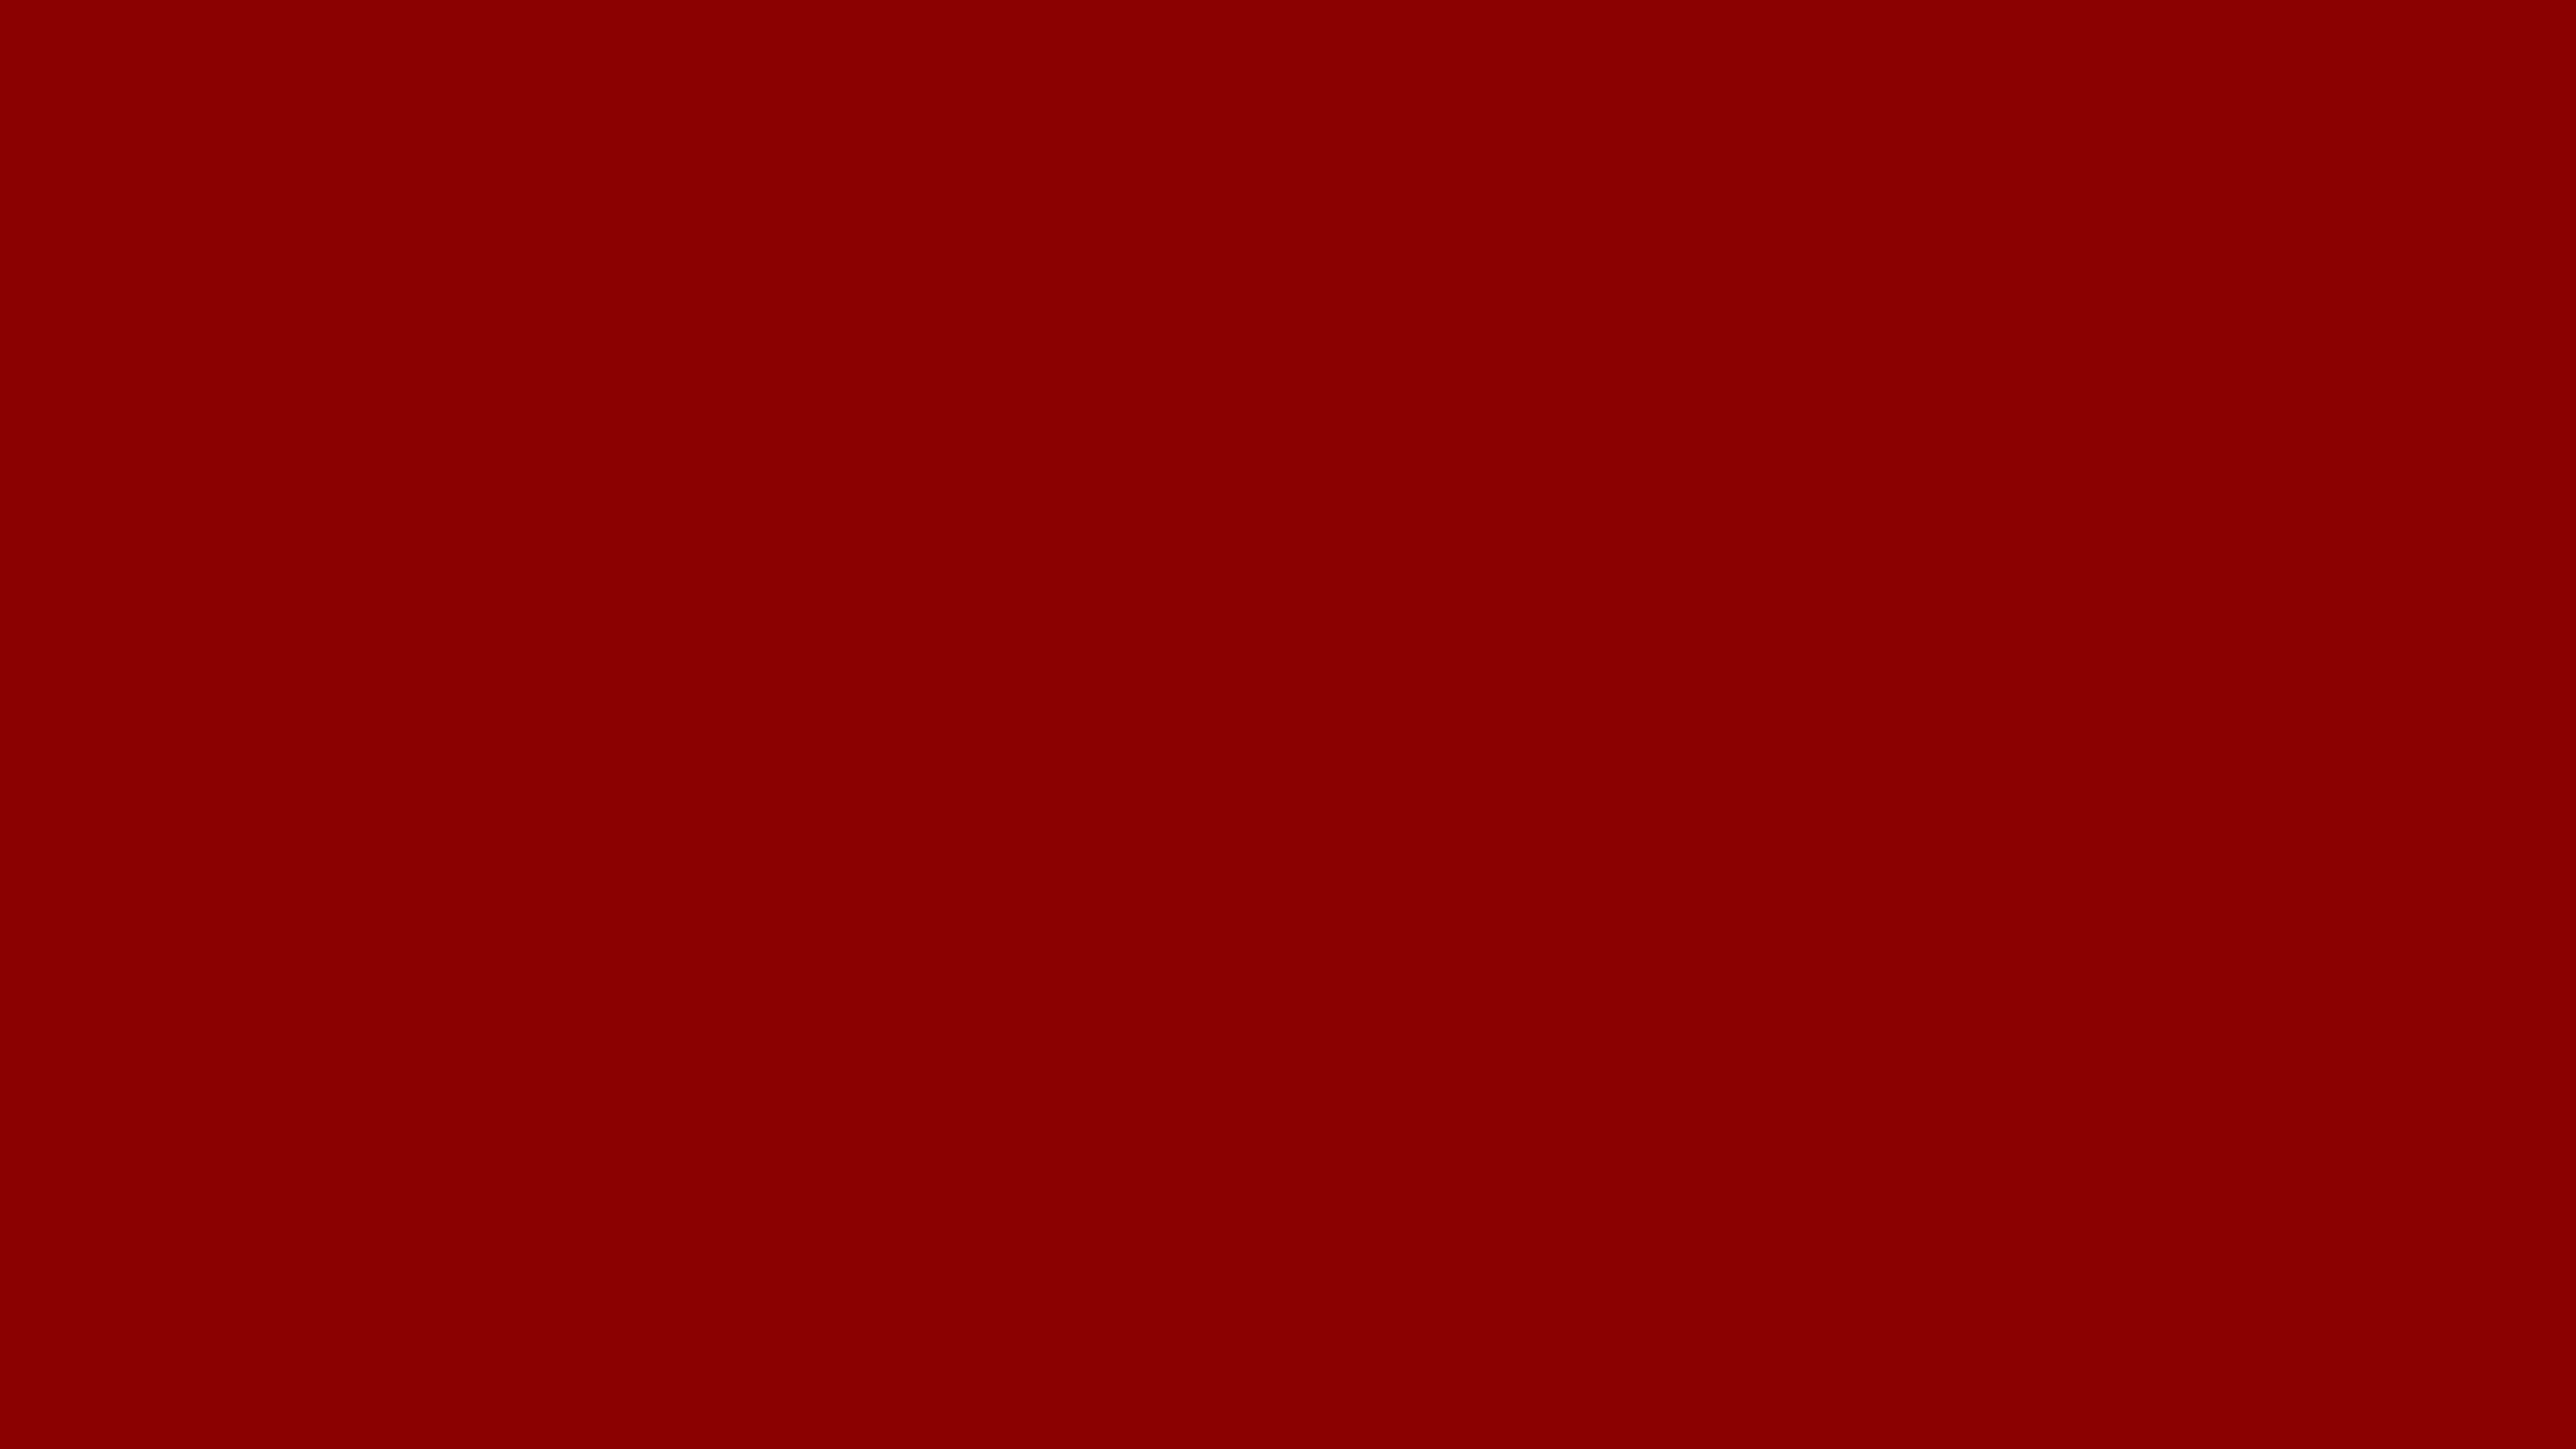 Plain Color Red / Wallpaper one colour single plain red solid color #